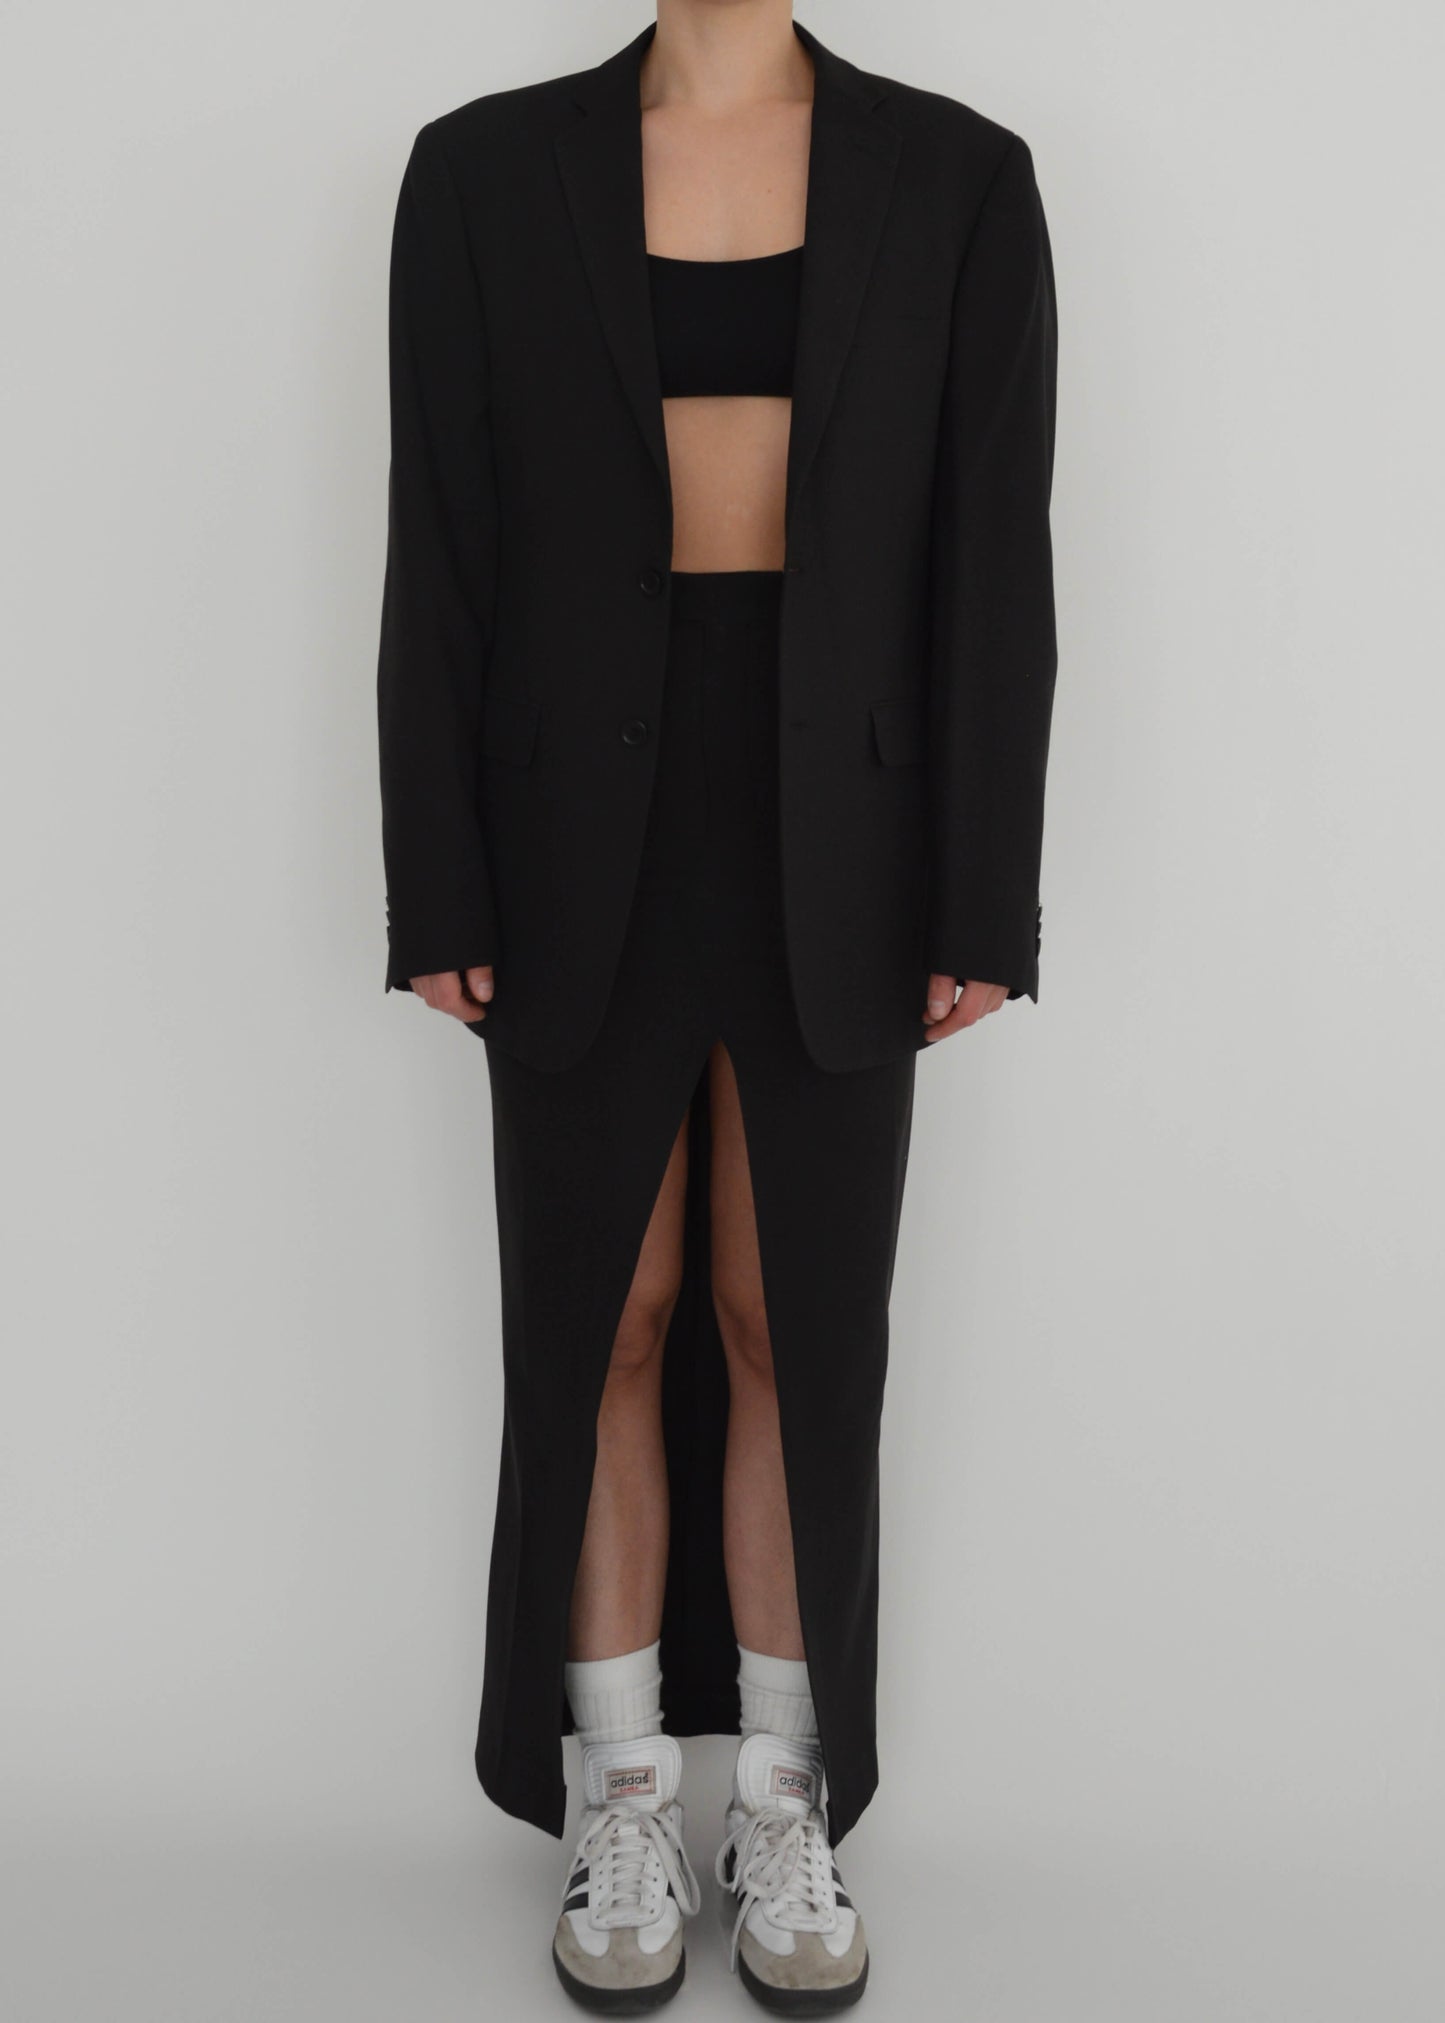 Vegan Skirt Suit - Pitch Black (XS/S)